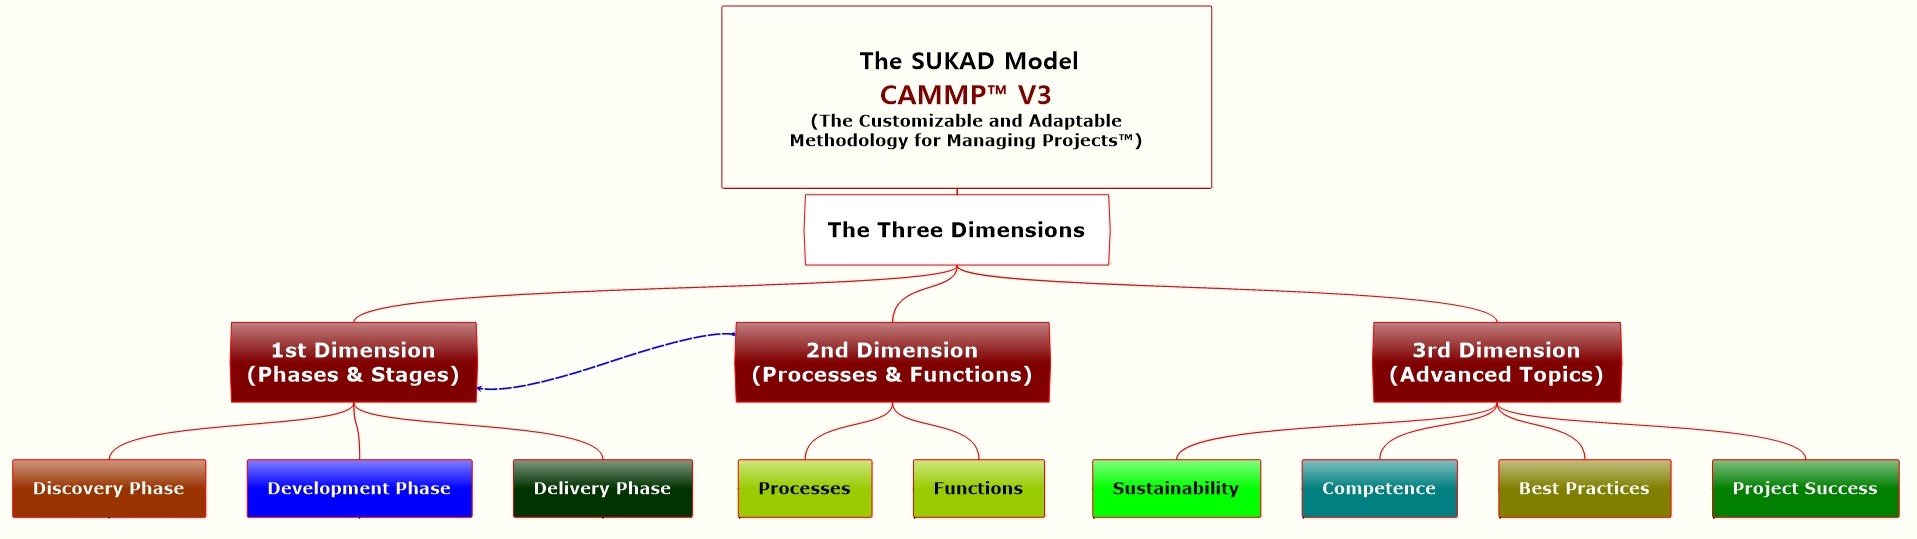 CAMMP, a three-dimensional model